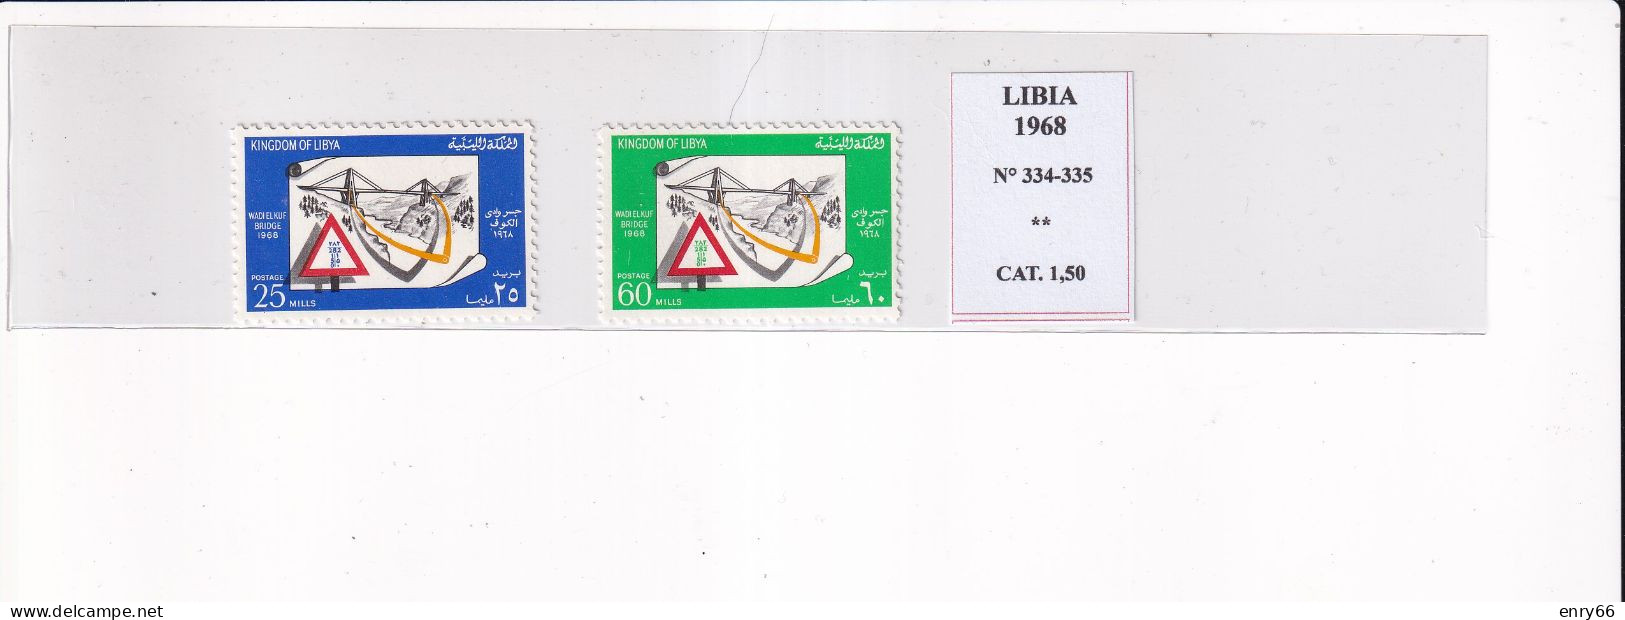 LIBIA 1968 N°334-335 MNH - Libia